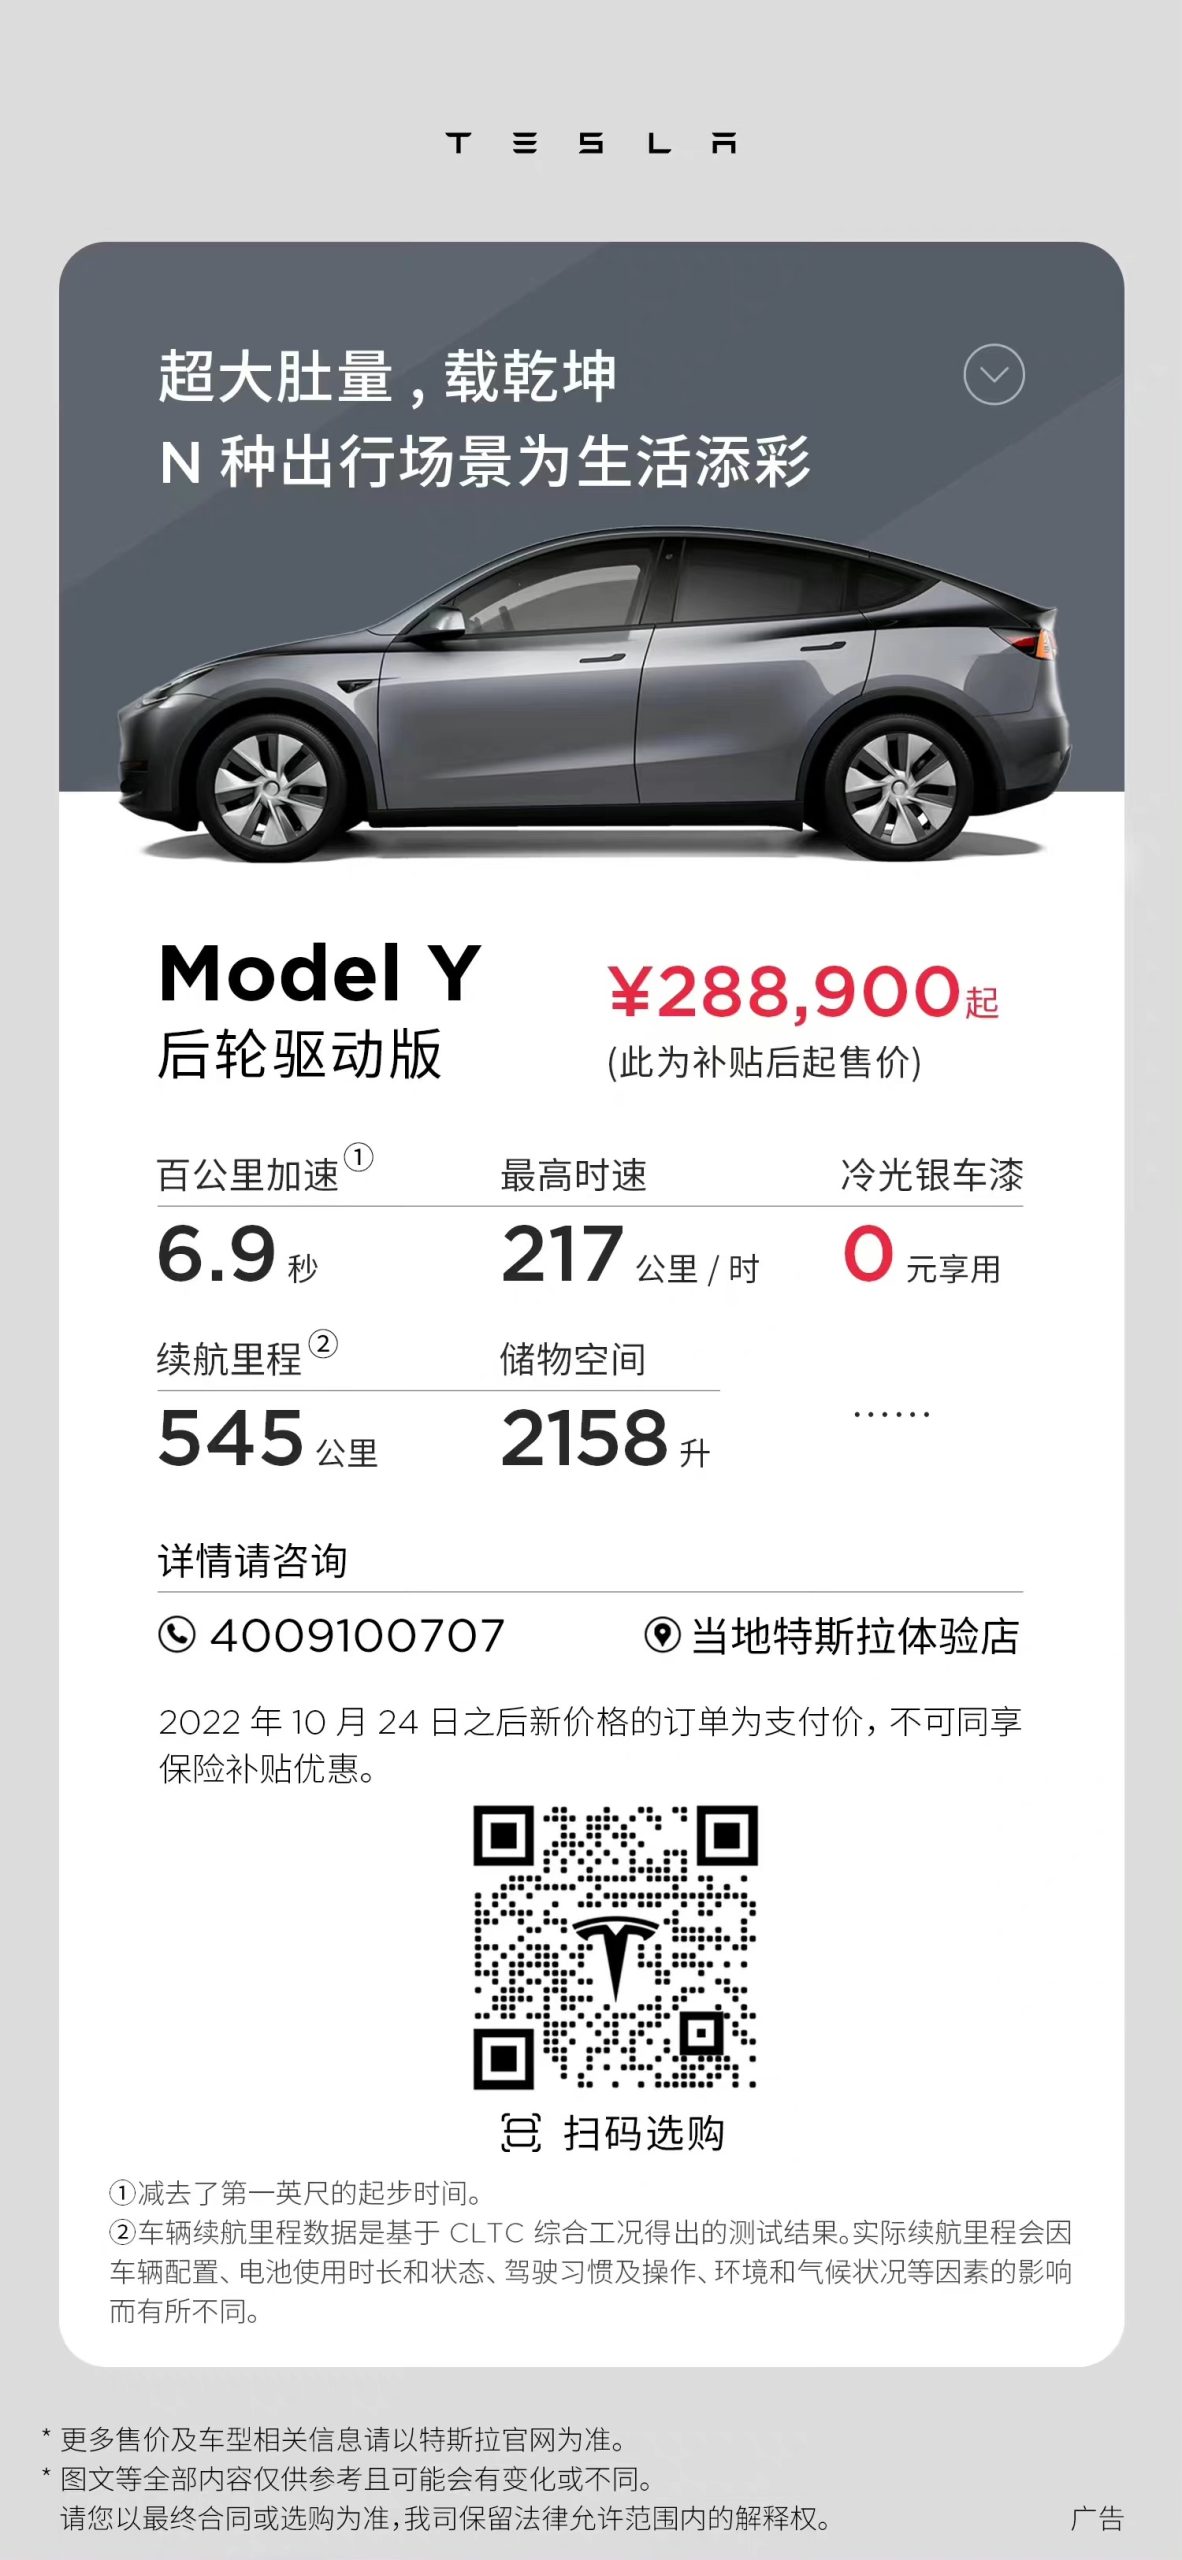 Tesla-china-Model-Y-RWD-price-cut